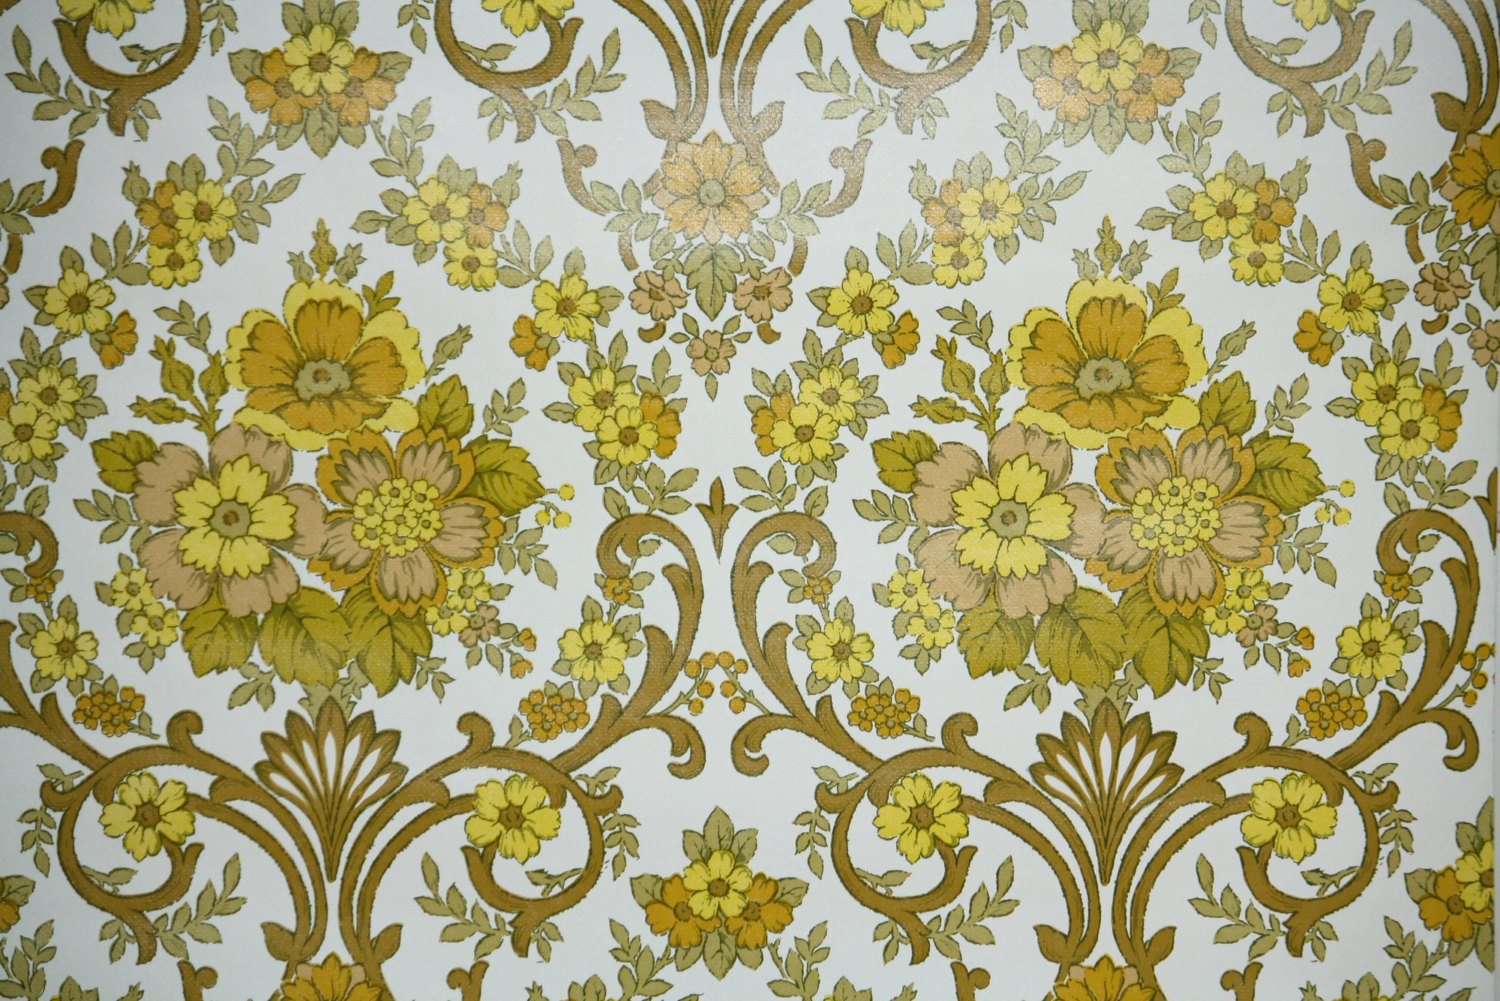 70s wallpaper,pattern,wallpaper,yellow,textile,floral design